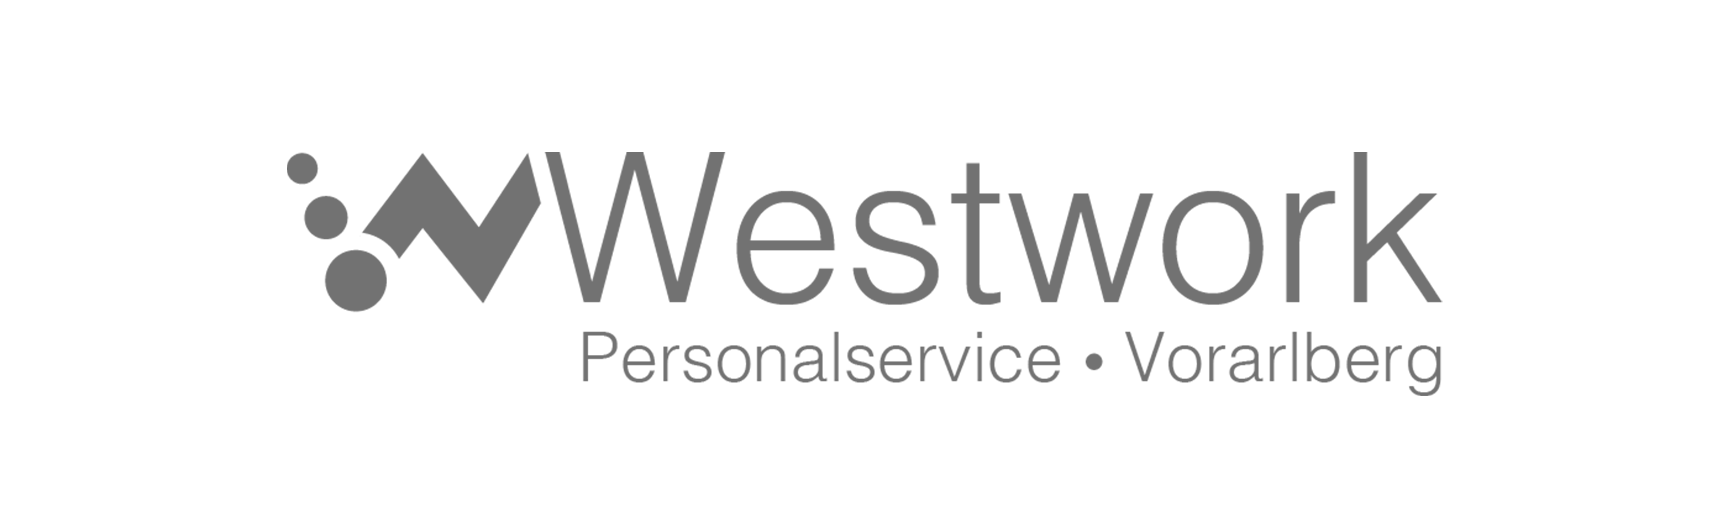 westwork